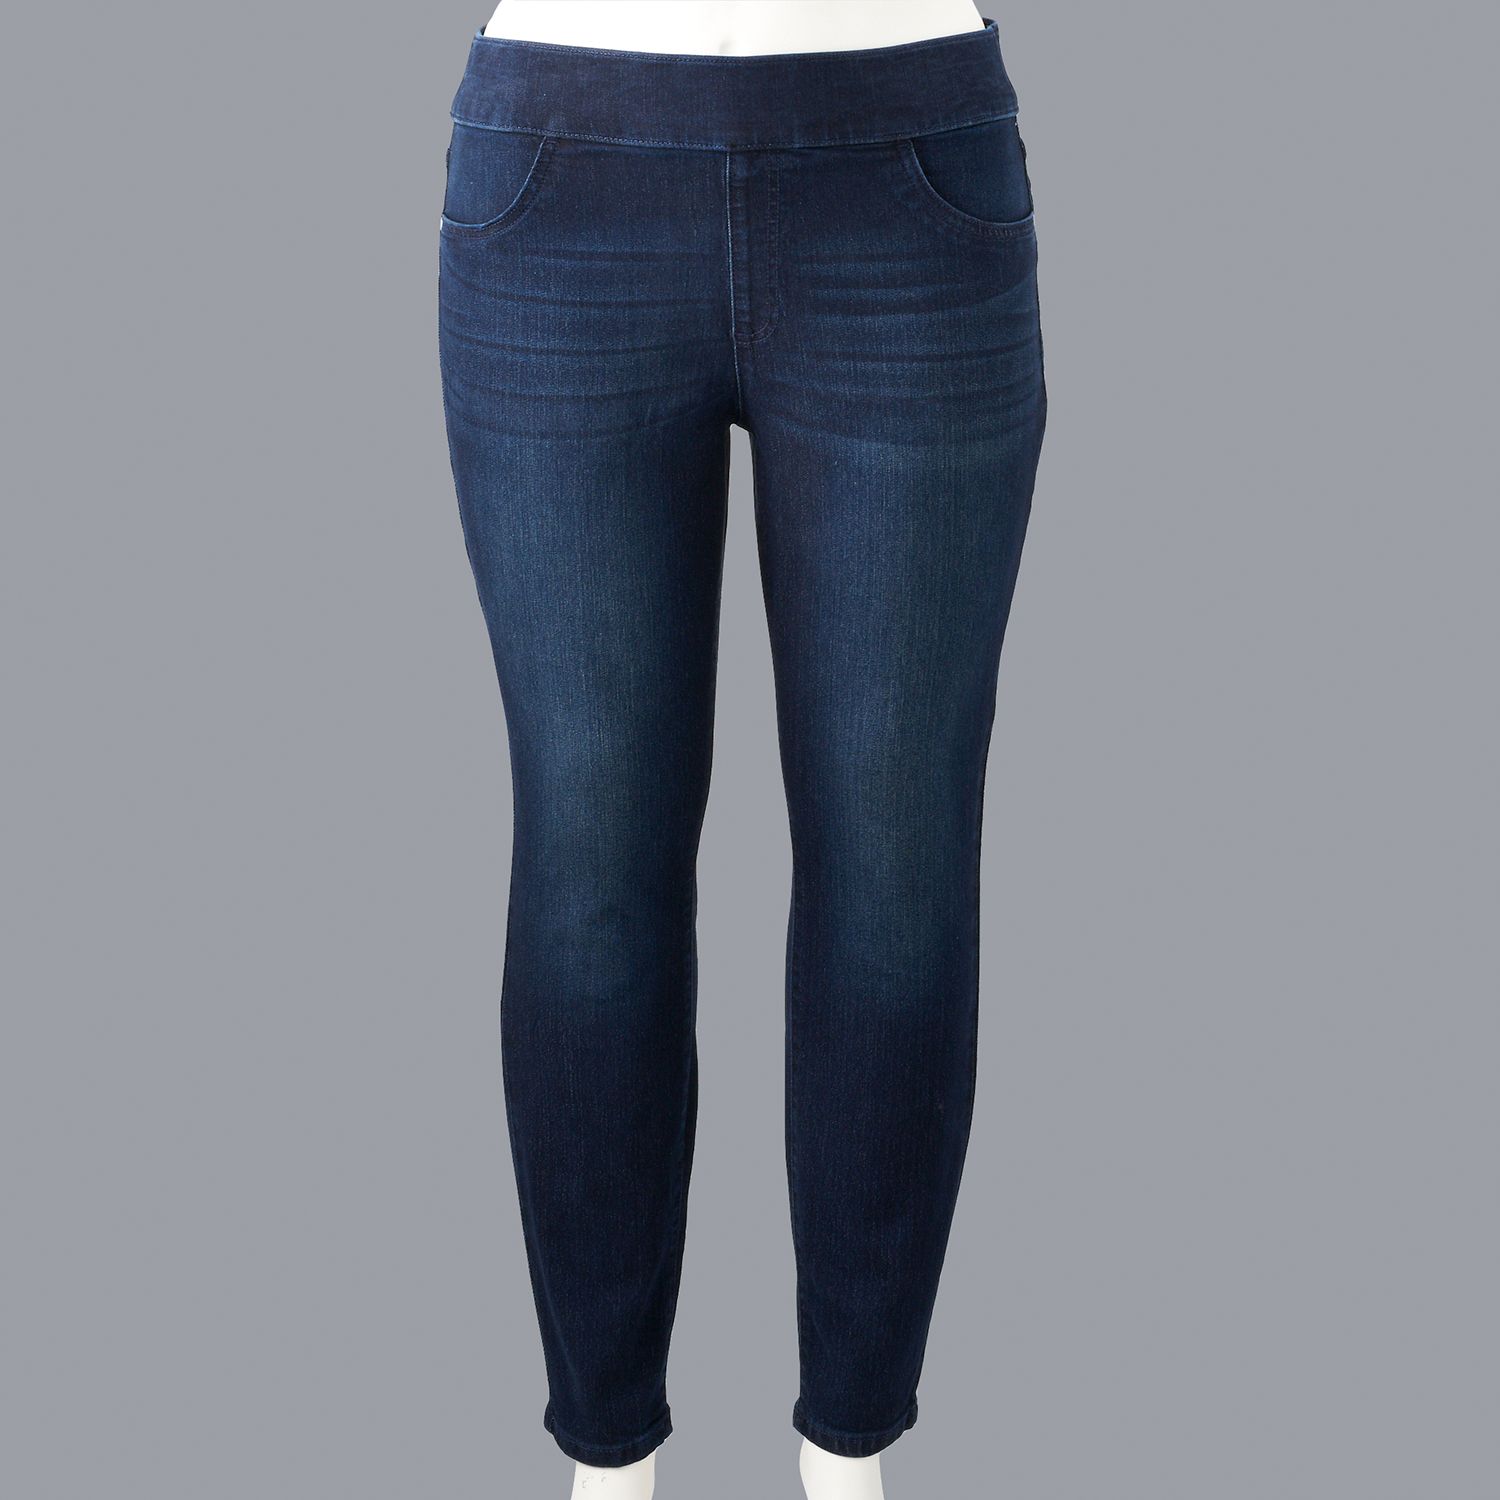 kohls simply vera jeans